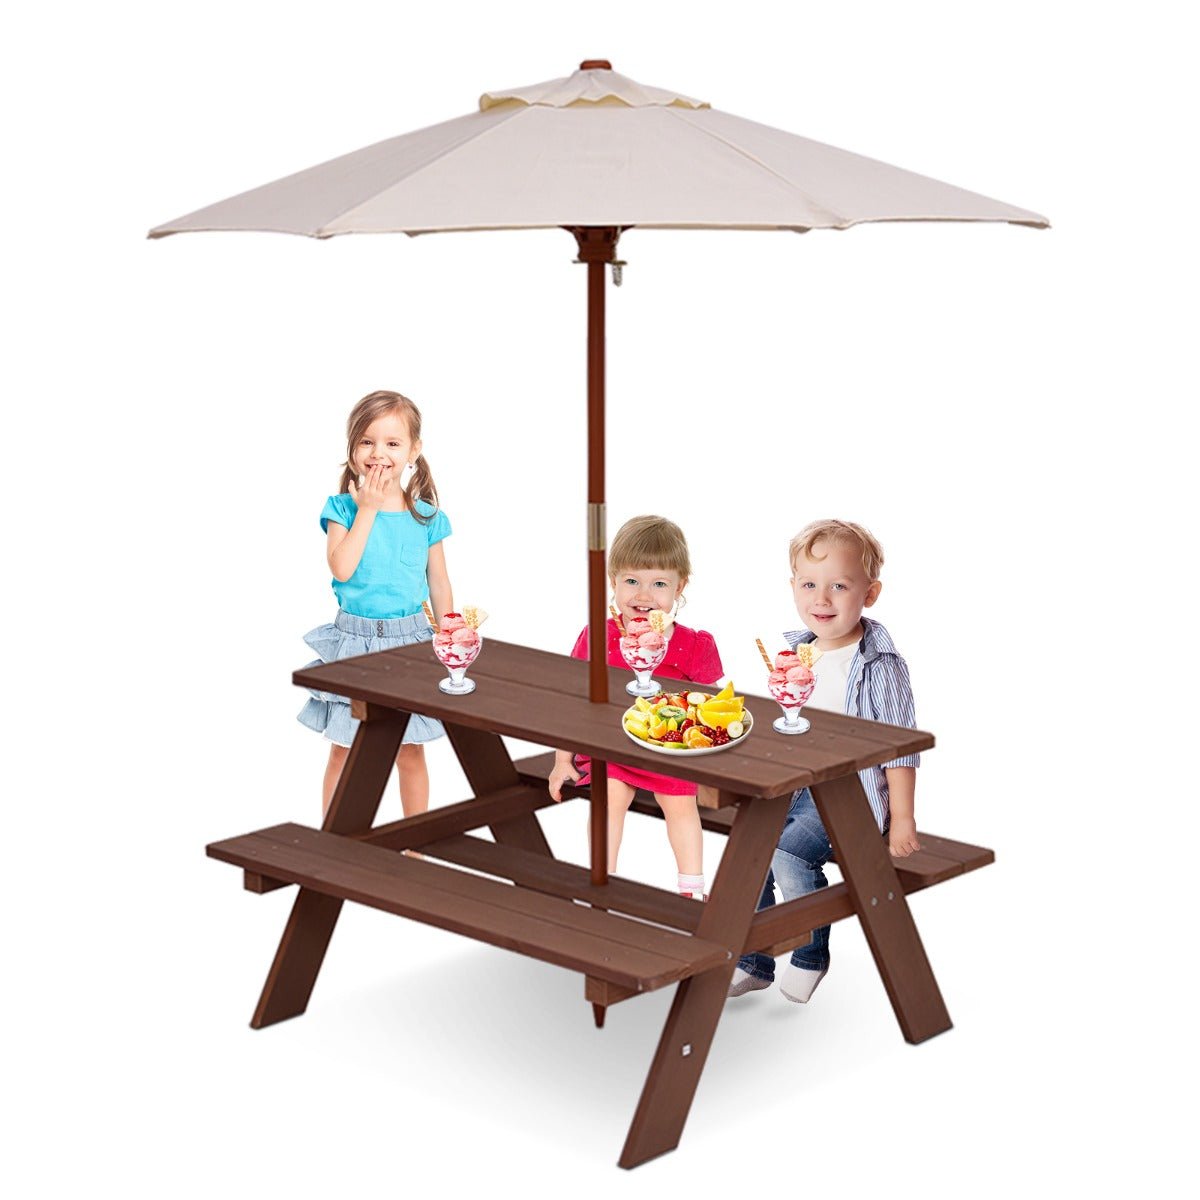 Versatile 3-in-1 Kids Picnic Table: Garden Fun with Removable Umbrella